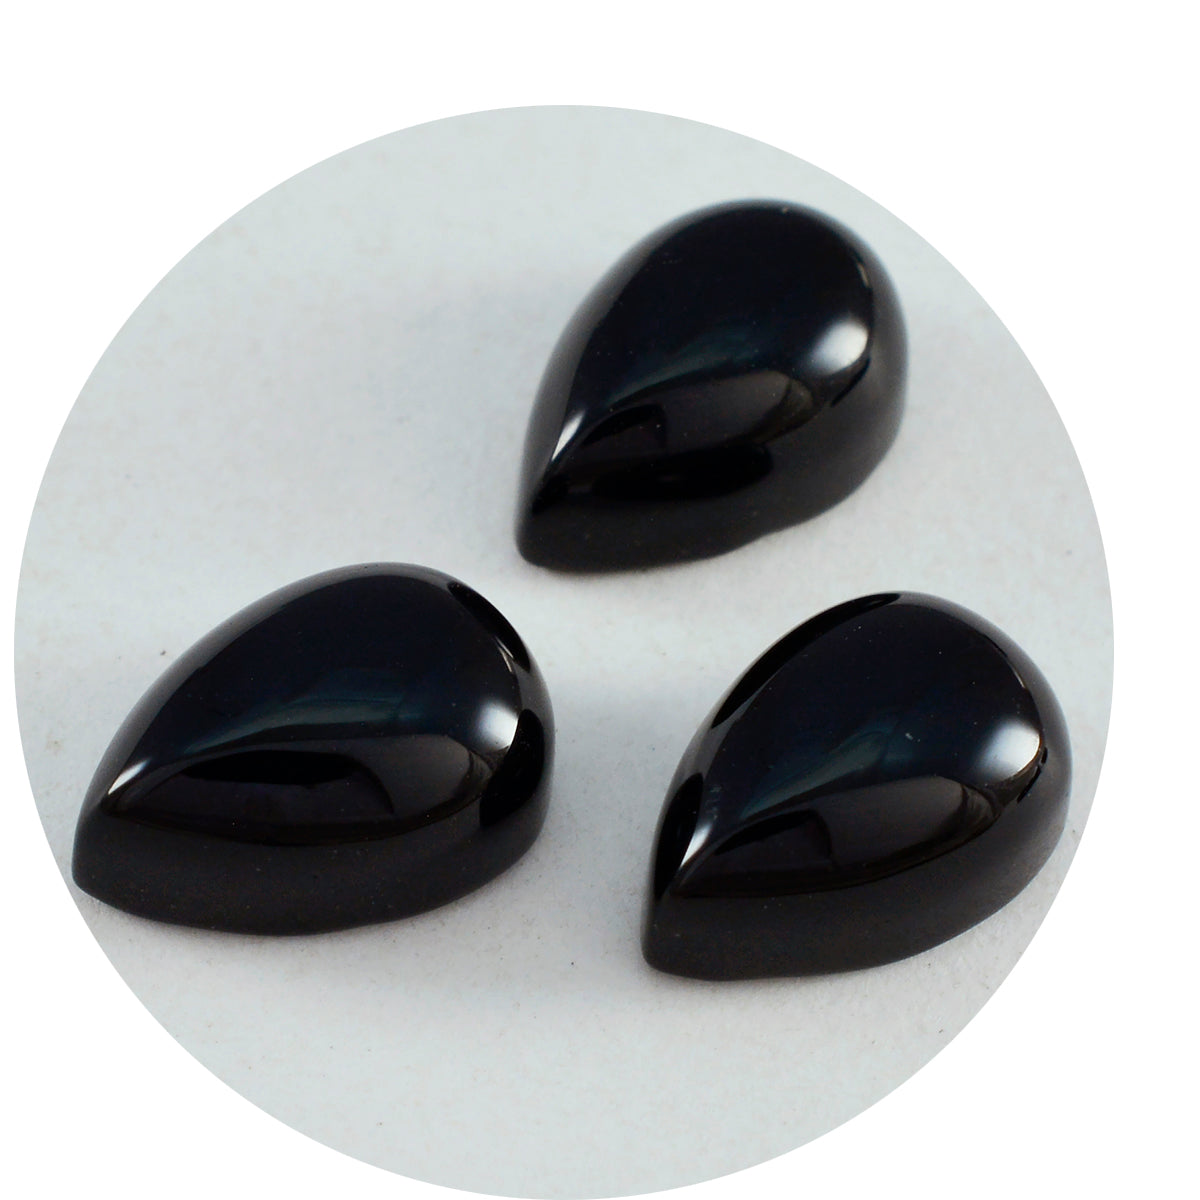 riyogems 1 st svart onyx cabochon 8x12 mm päronform söta kvalitetsädelstenar